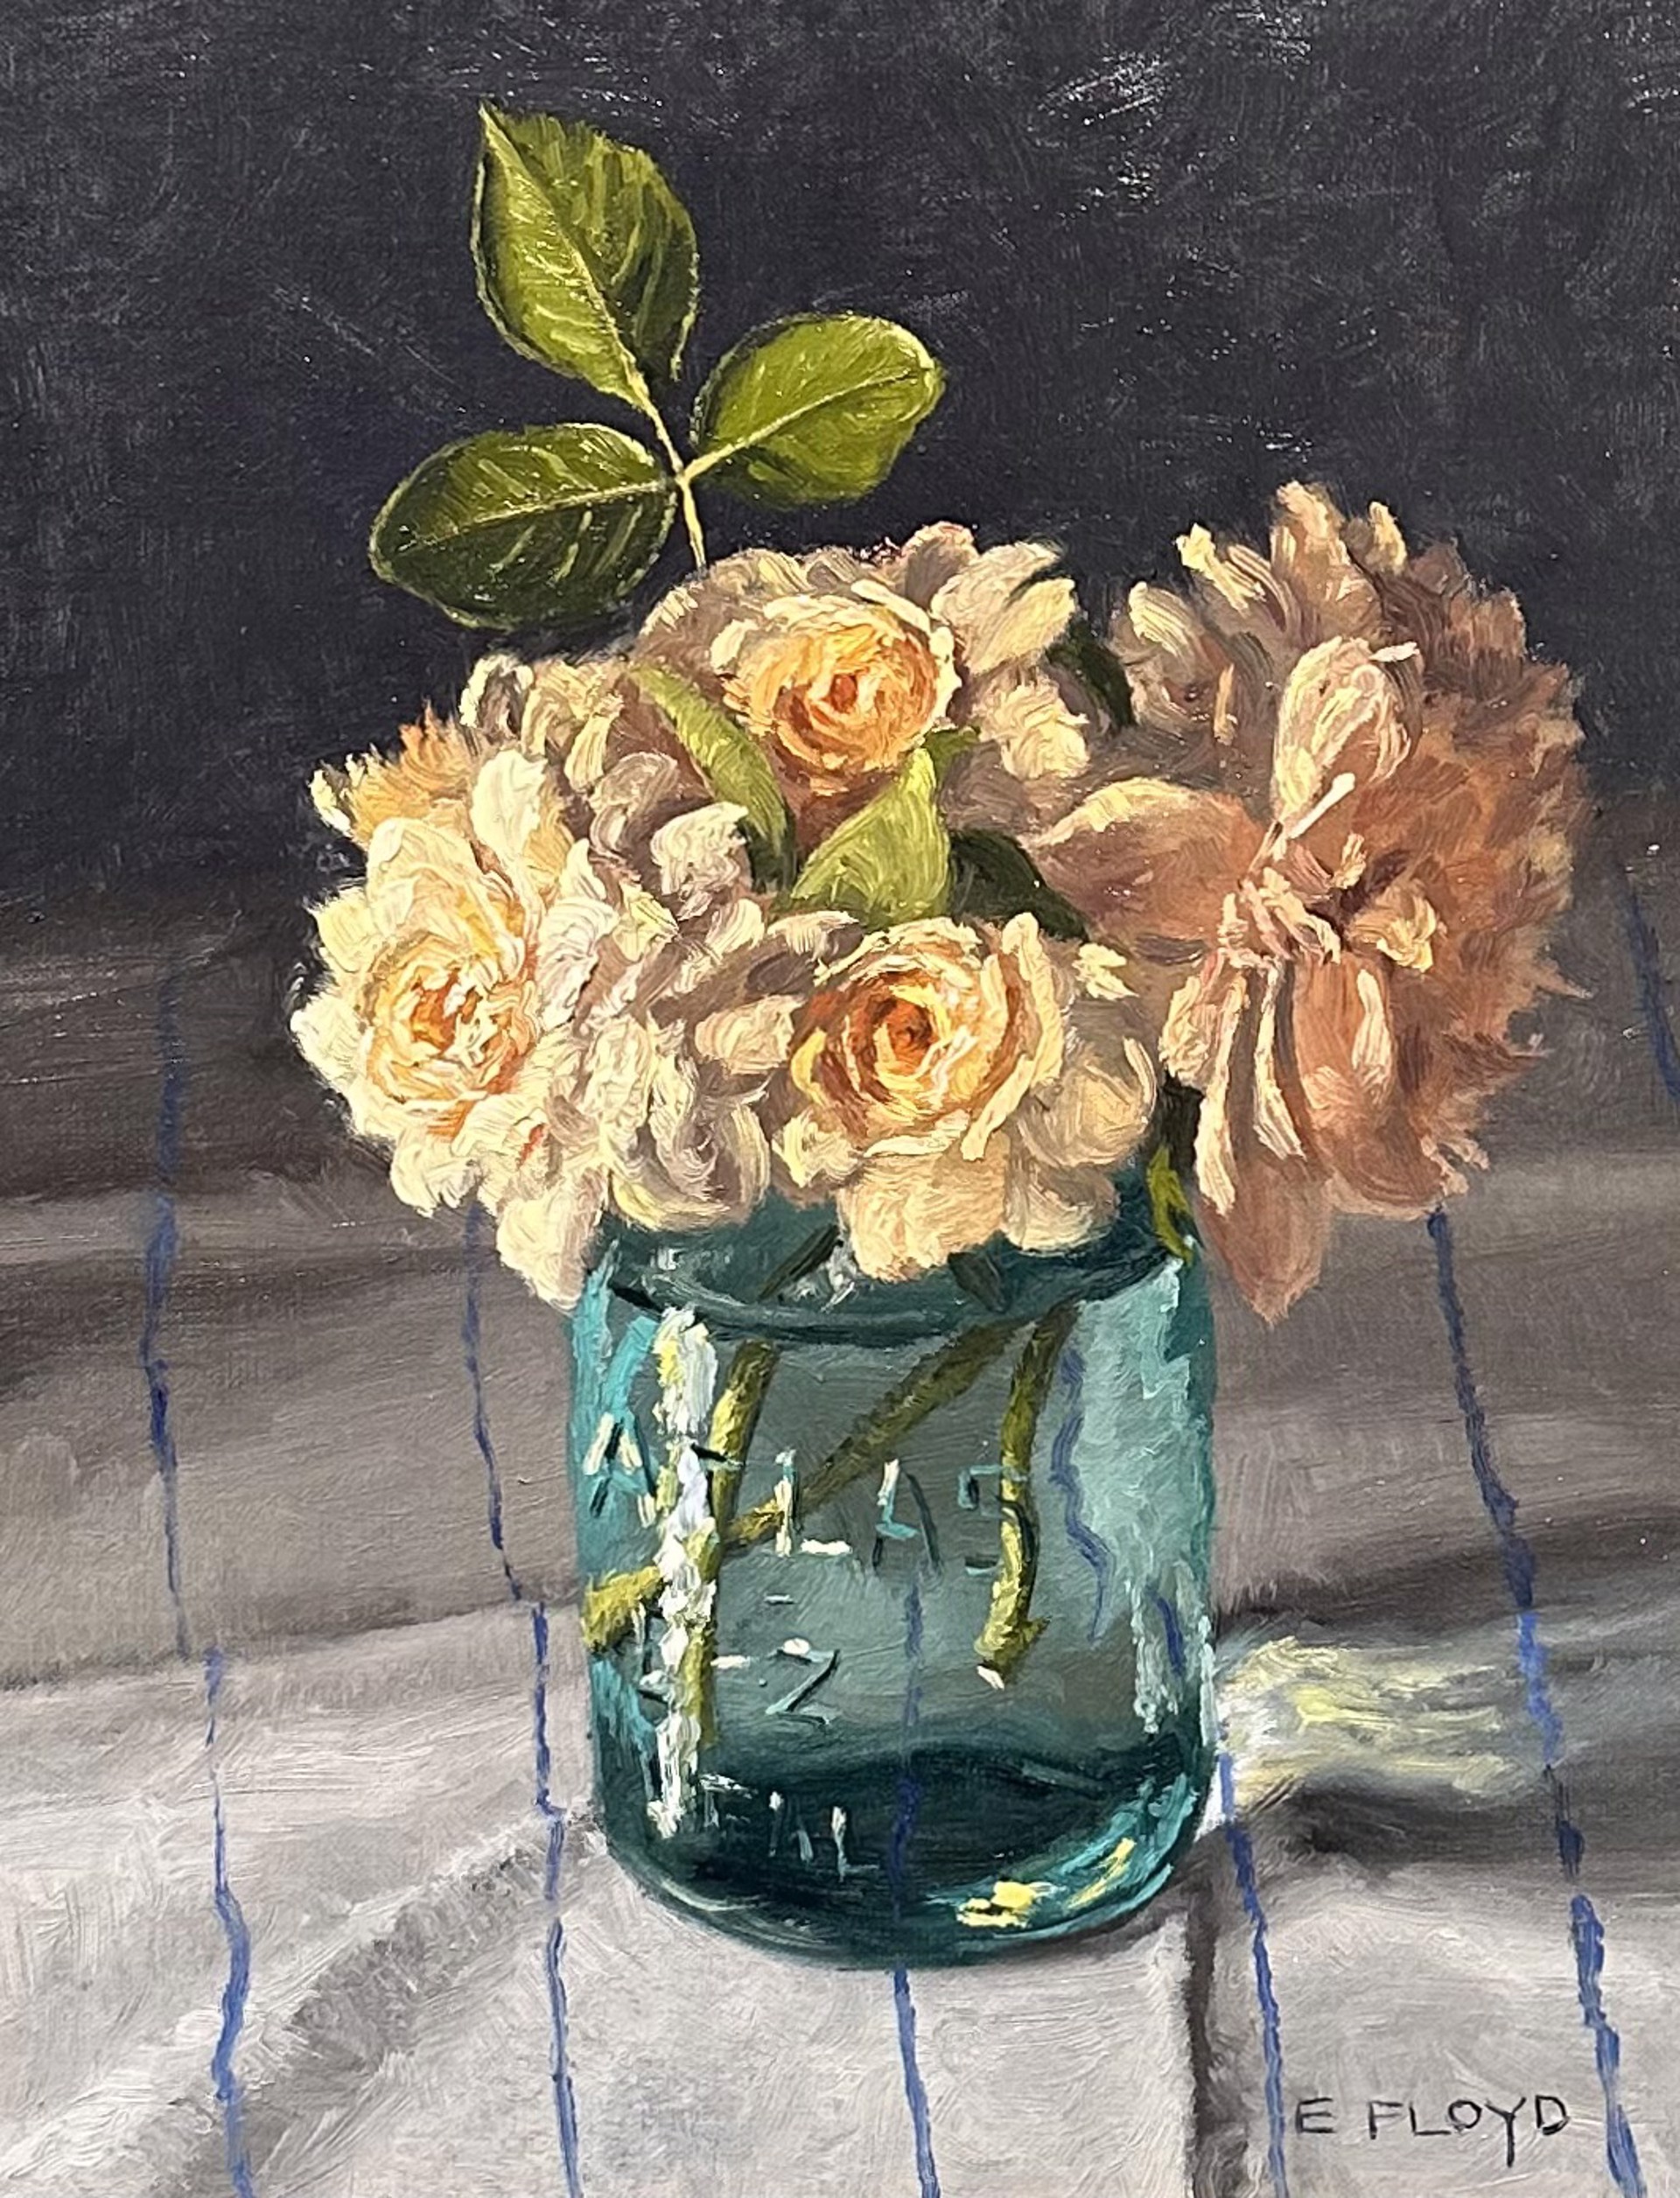 Port Sunlight Roses by Elizabeth Floyd